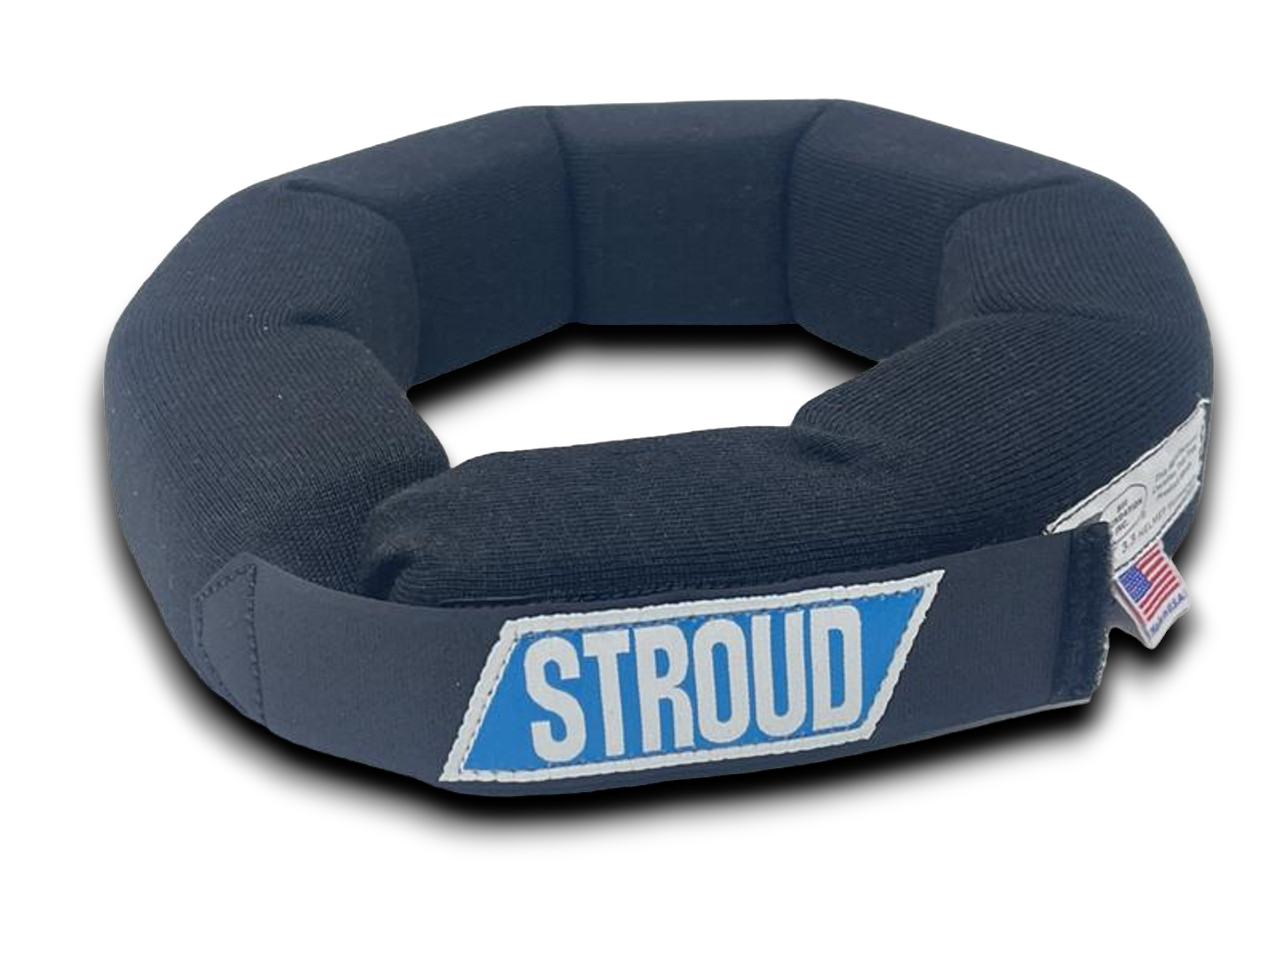 Stroud Neck Collar